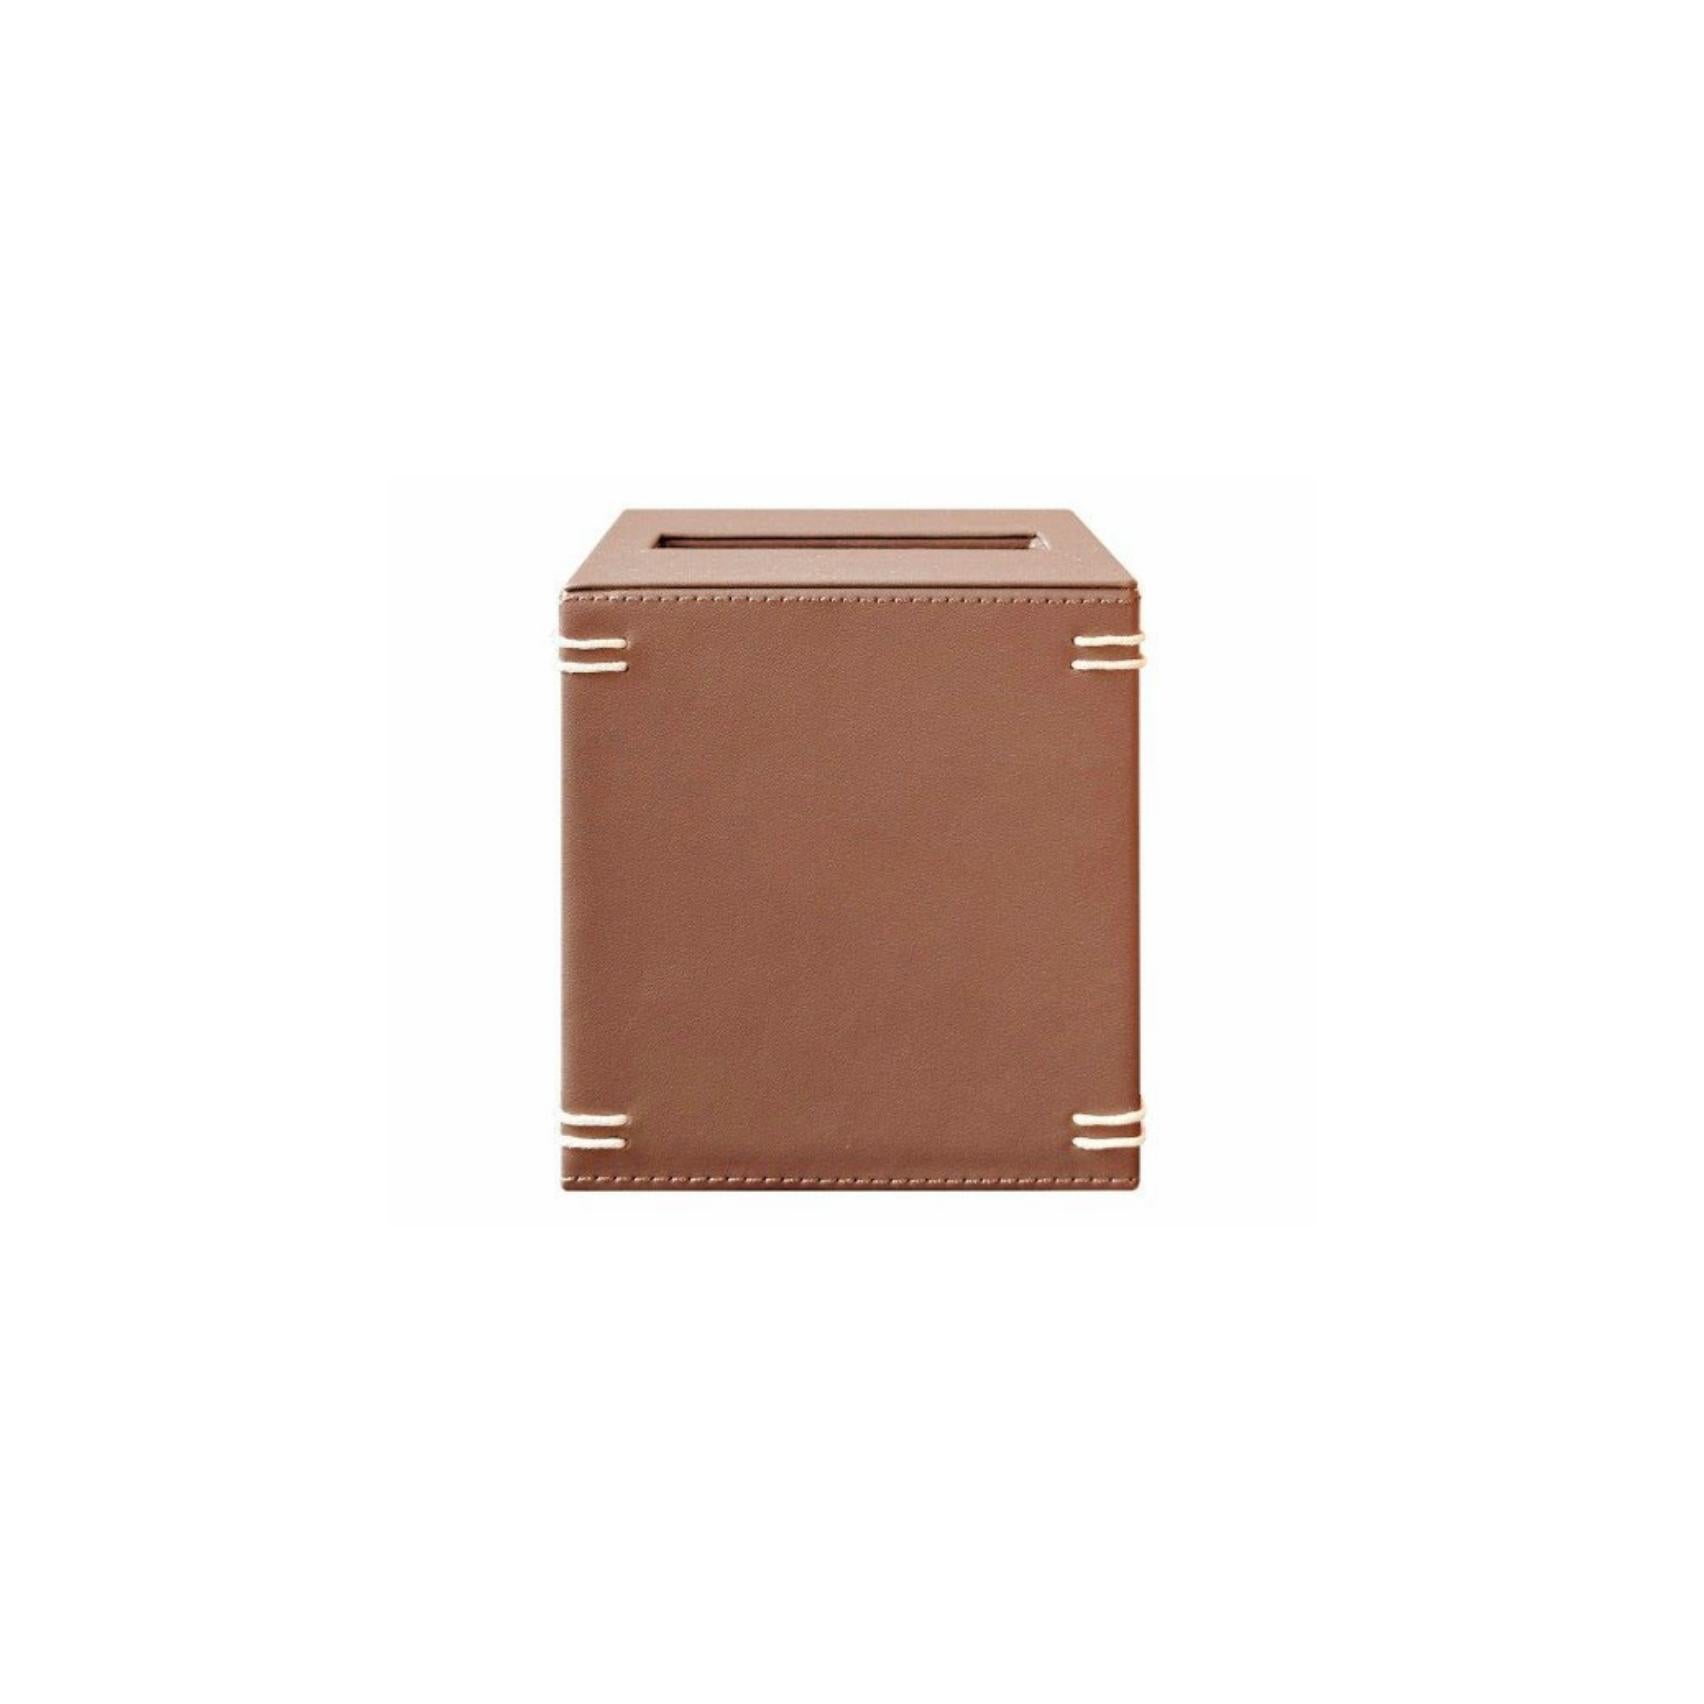 Description: Tissue box
Color: Caramel
Size: 14 x 14 x 15 H cm
Material: PU
Collection: Knotted.